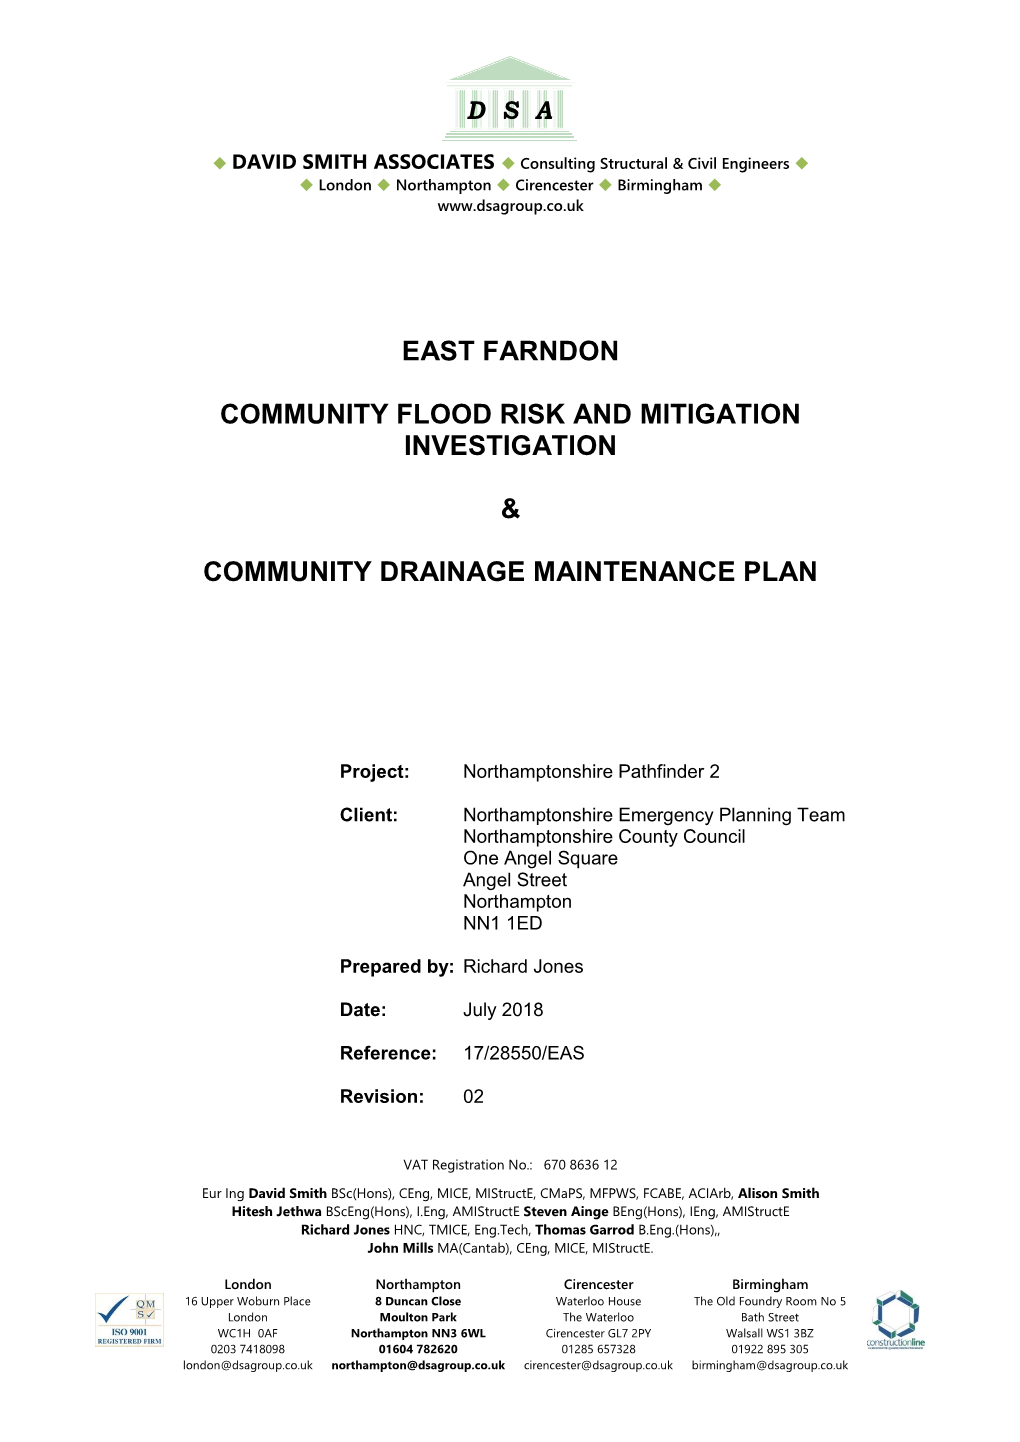 East Farndon Community Flood Risk and Mitigation Investigation Community Drainage Maintenance Plan